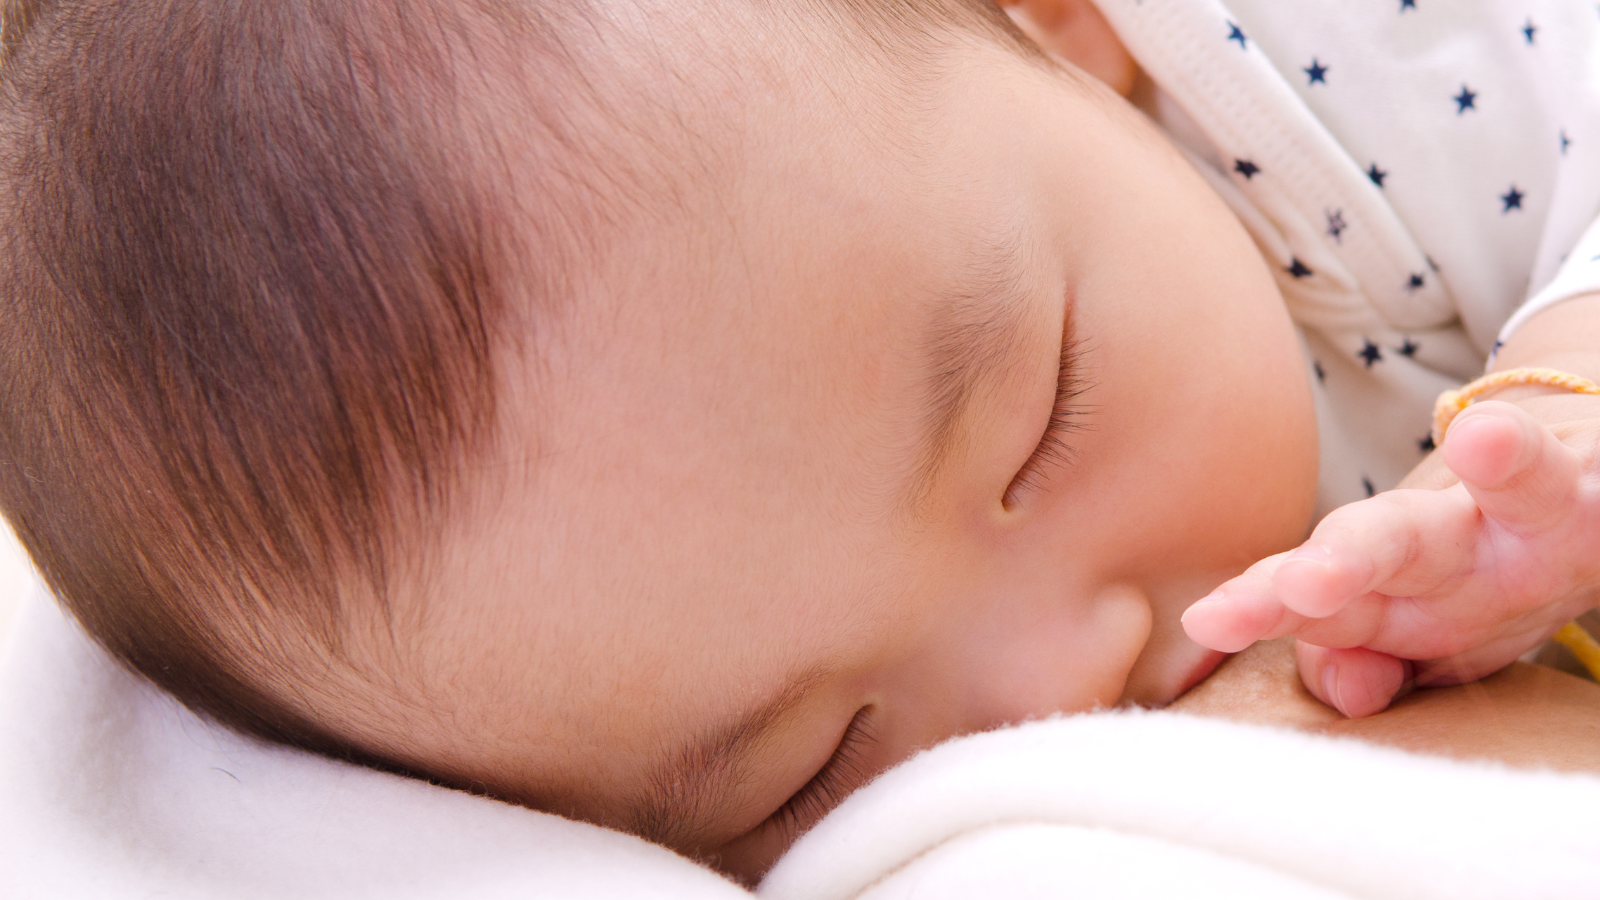 Close up photo of breastfeeding baby.